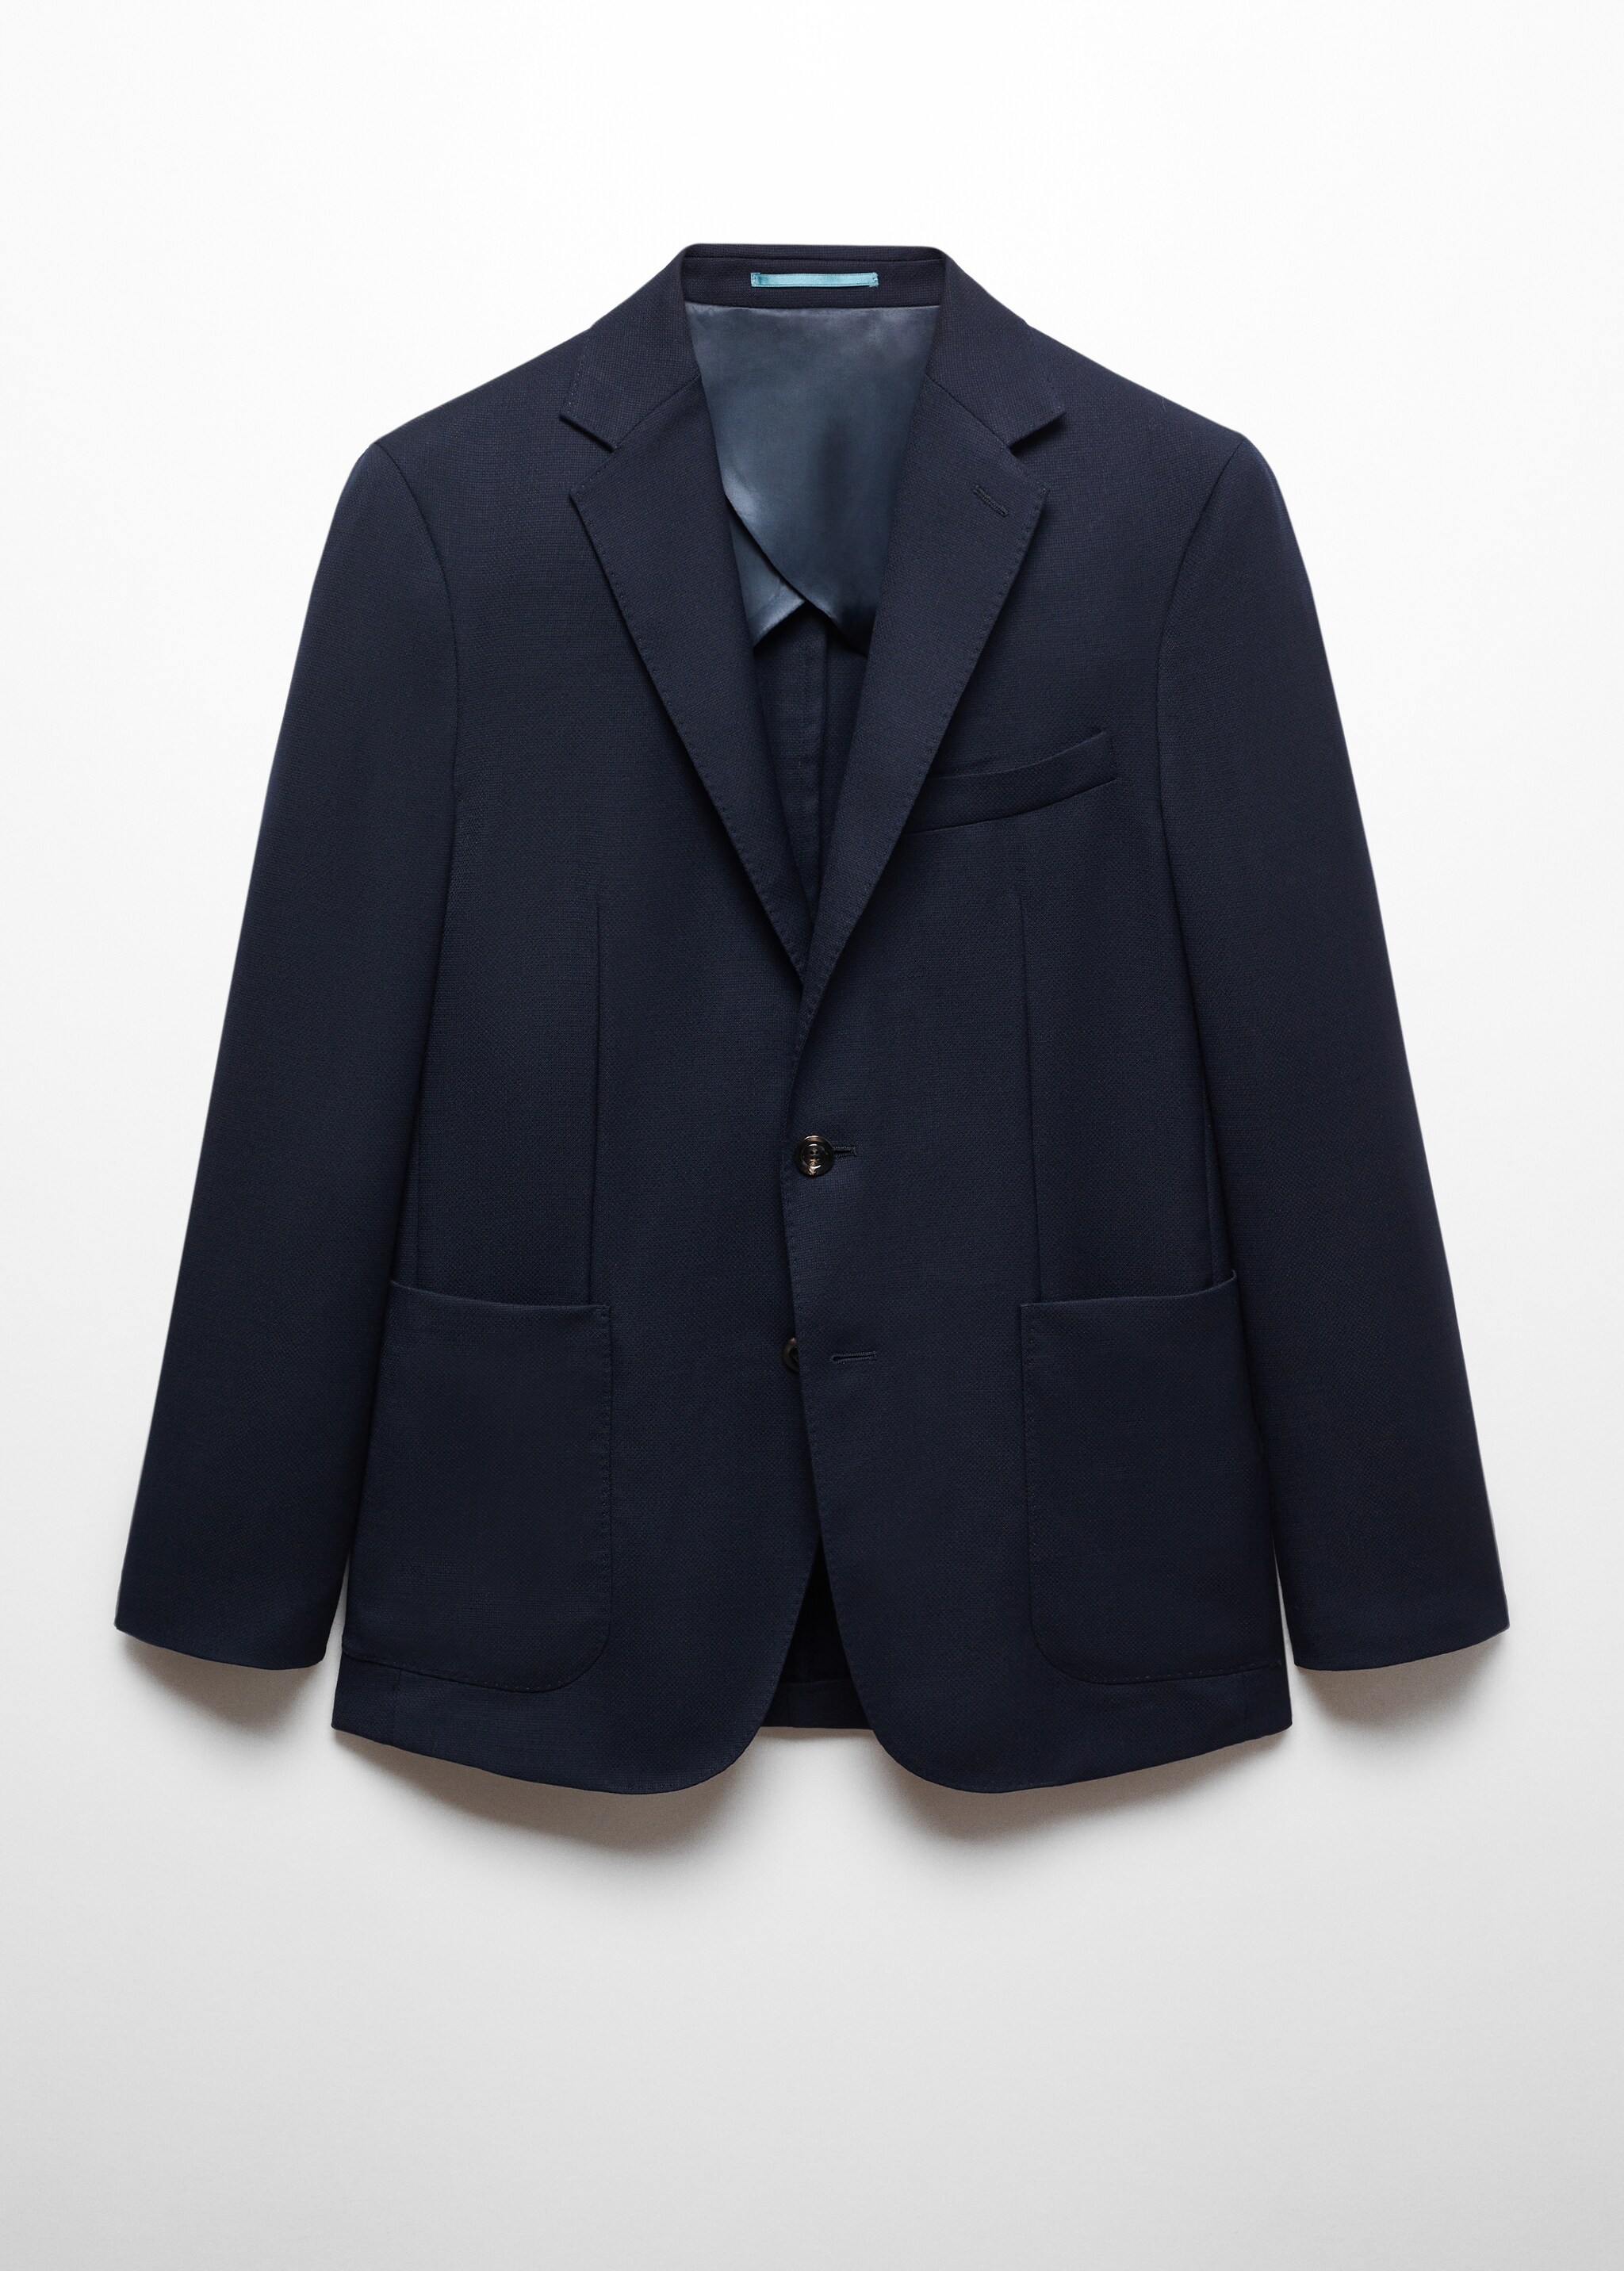 100% Italian virgin wool slim-fit suit blazer - Article without model